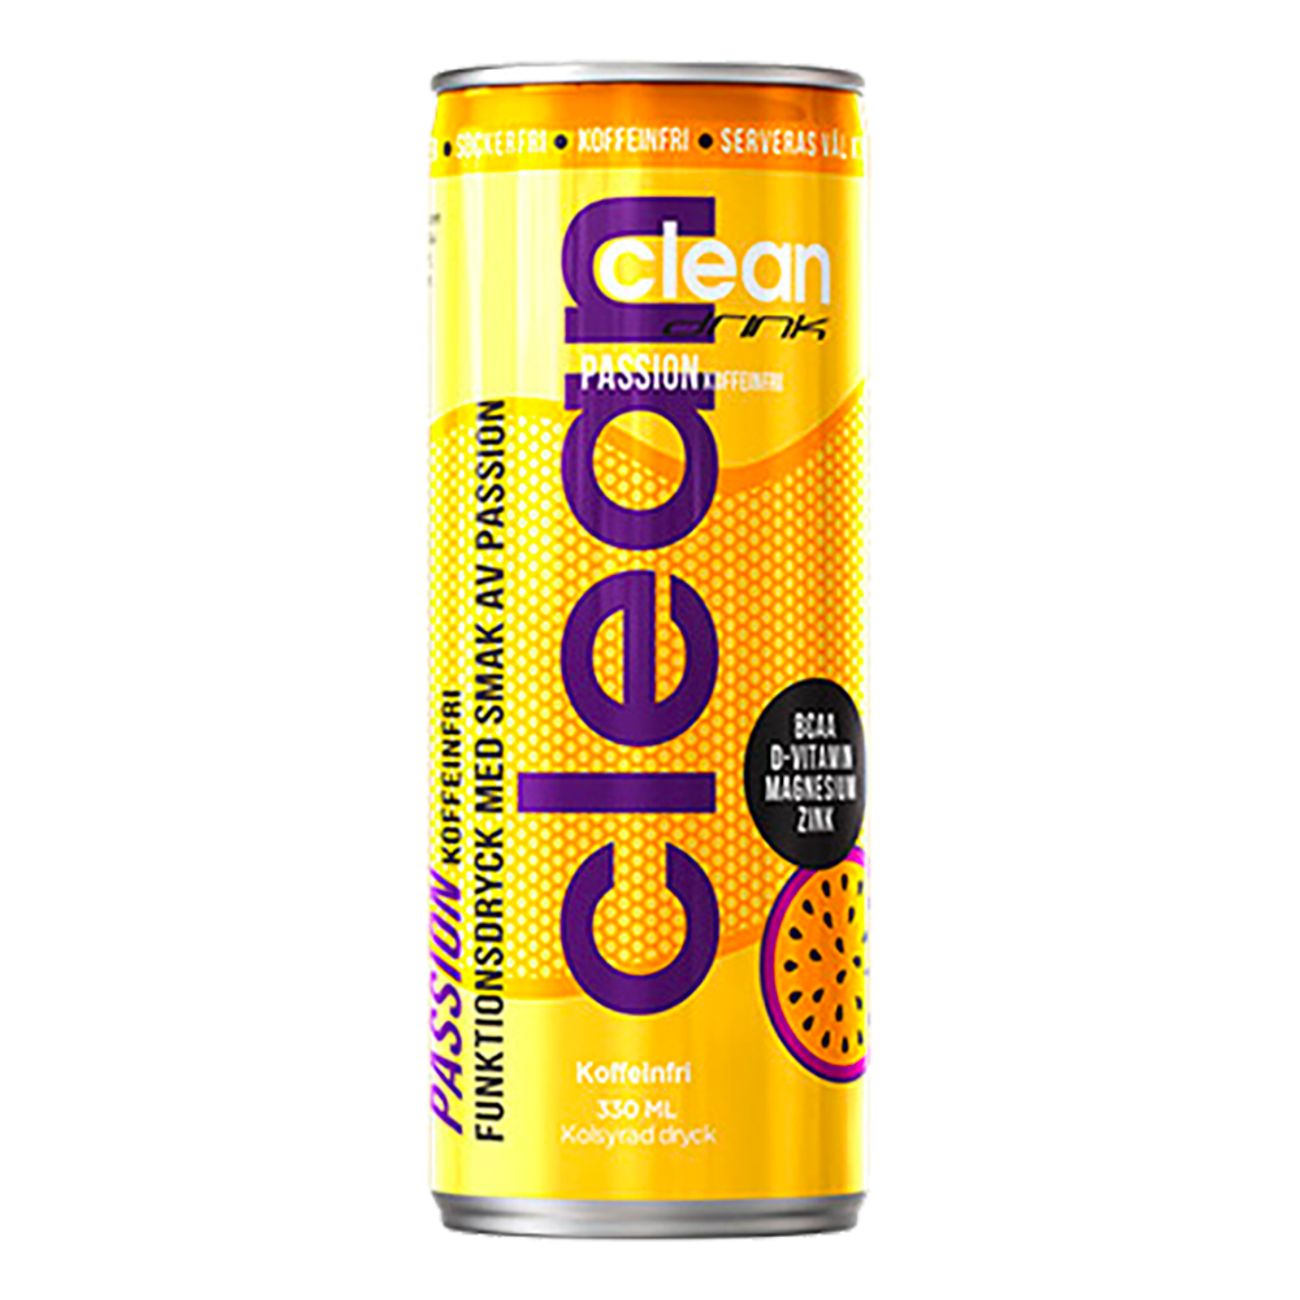 clean-drink-passion-koffeinfri-82511-1